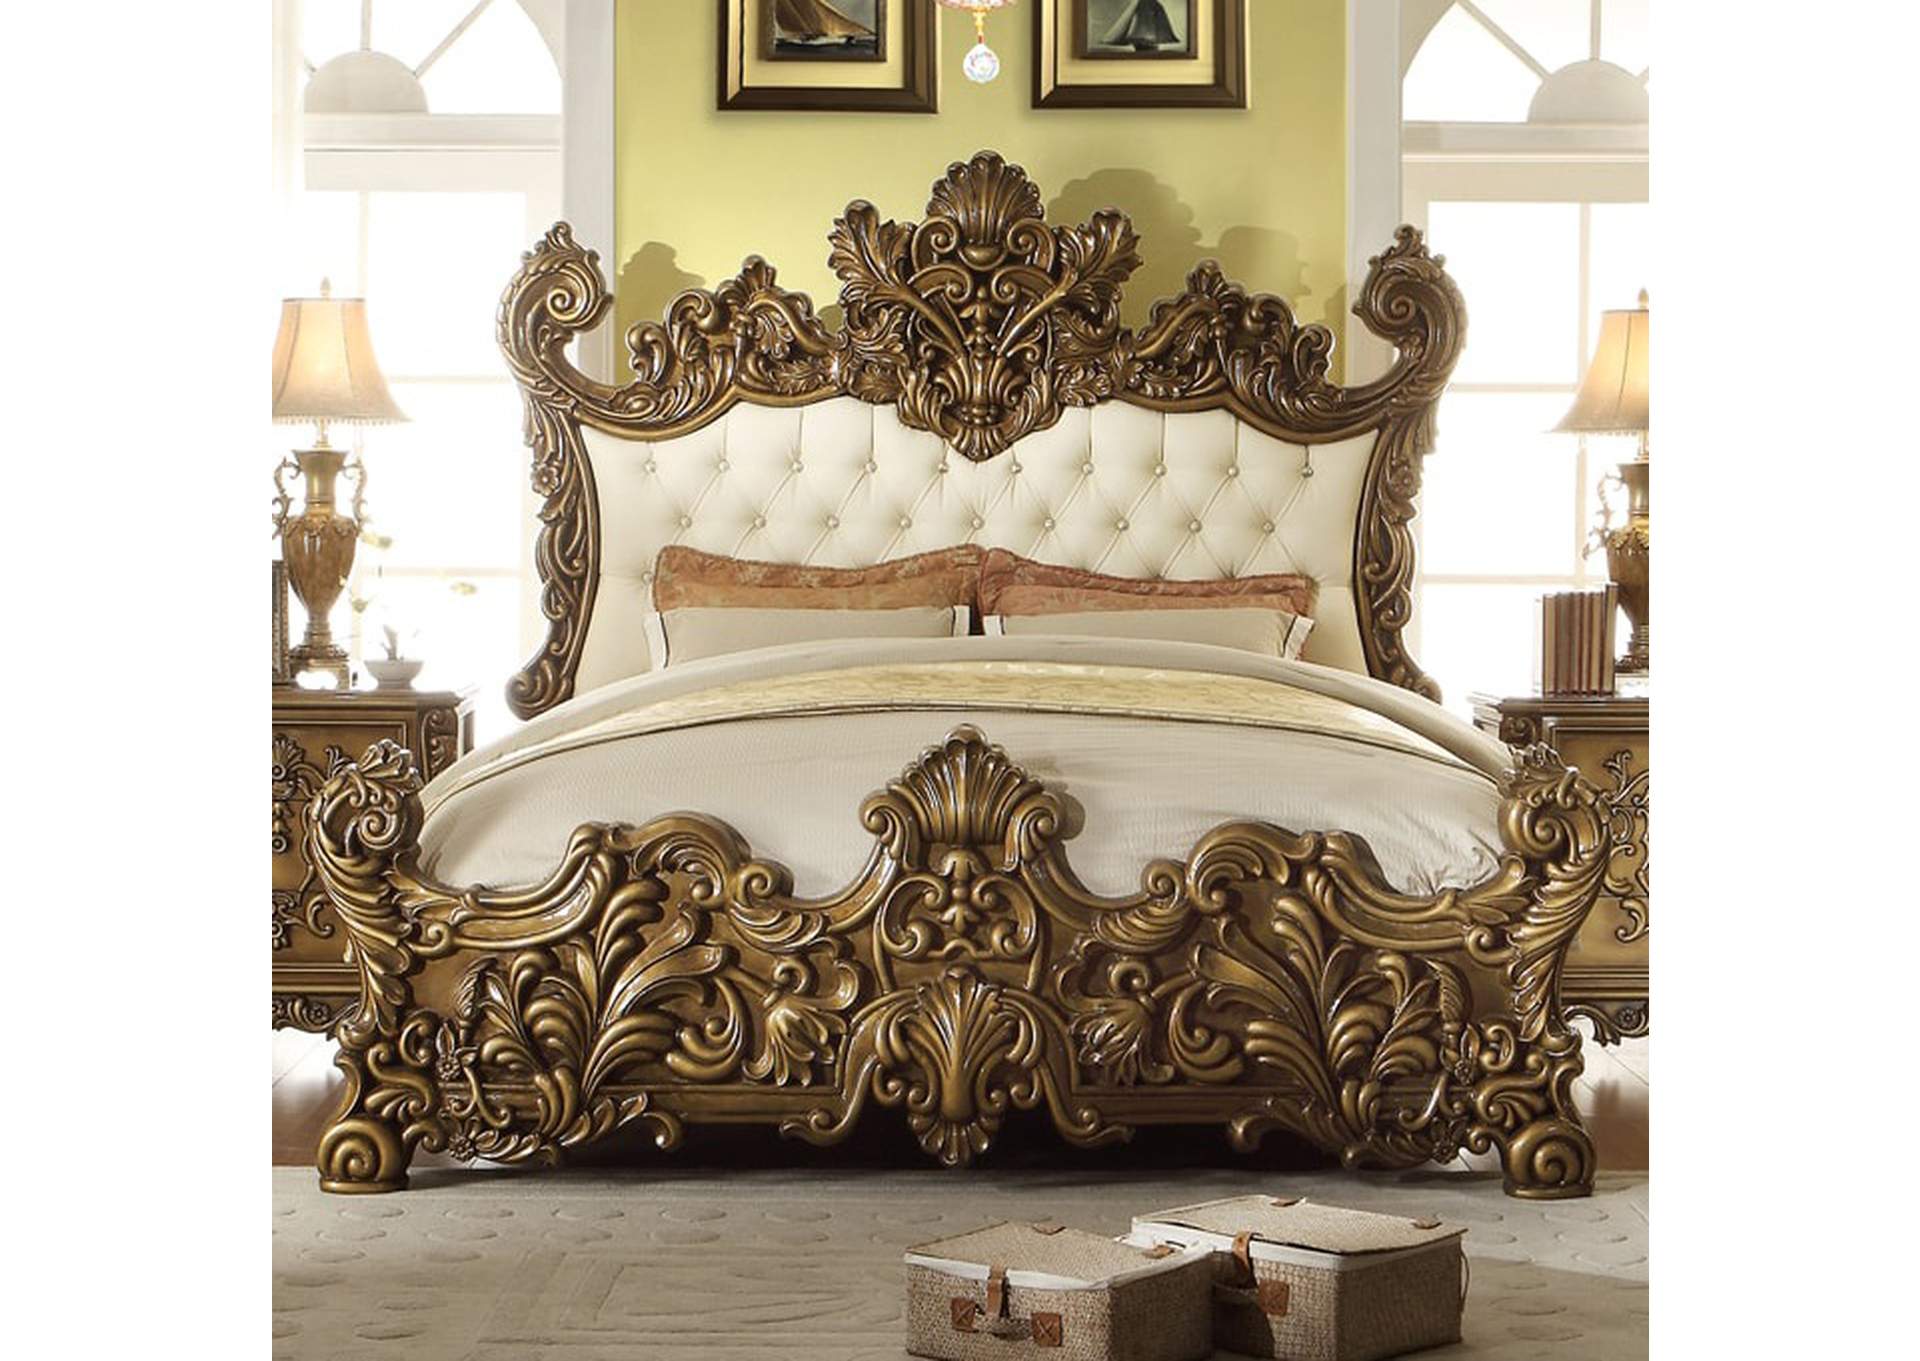 HD-8008 - California King Bed,Homey Design